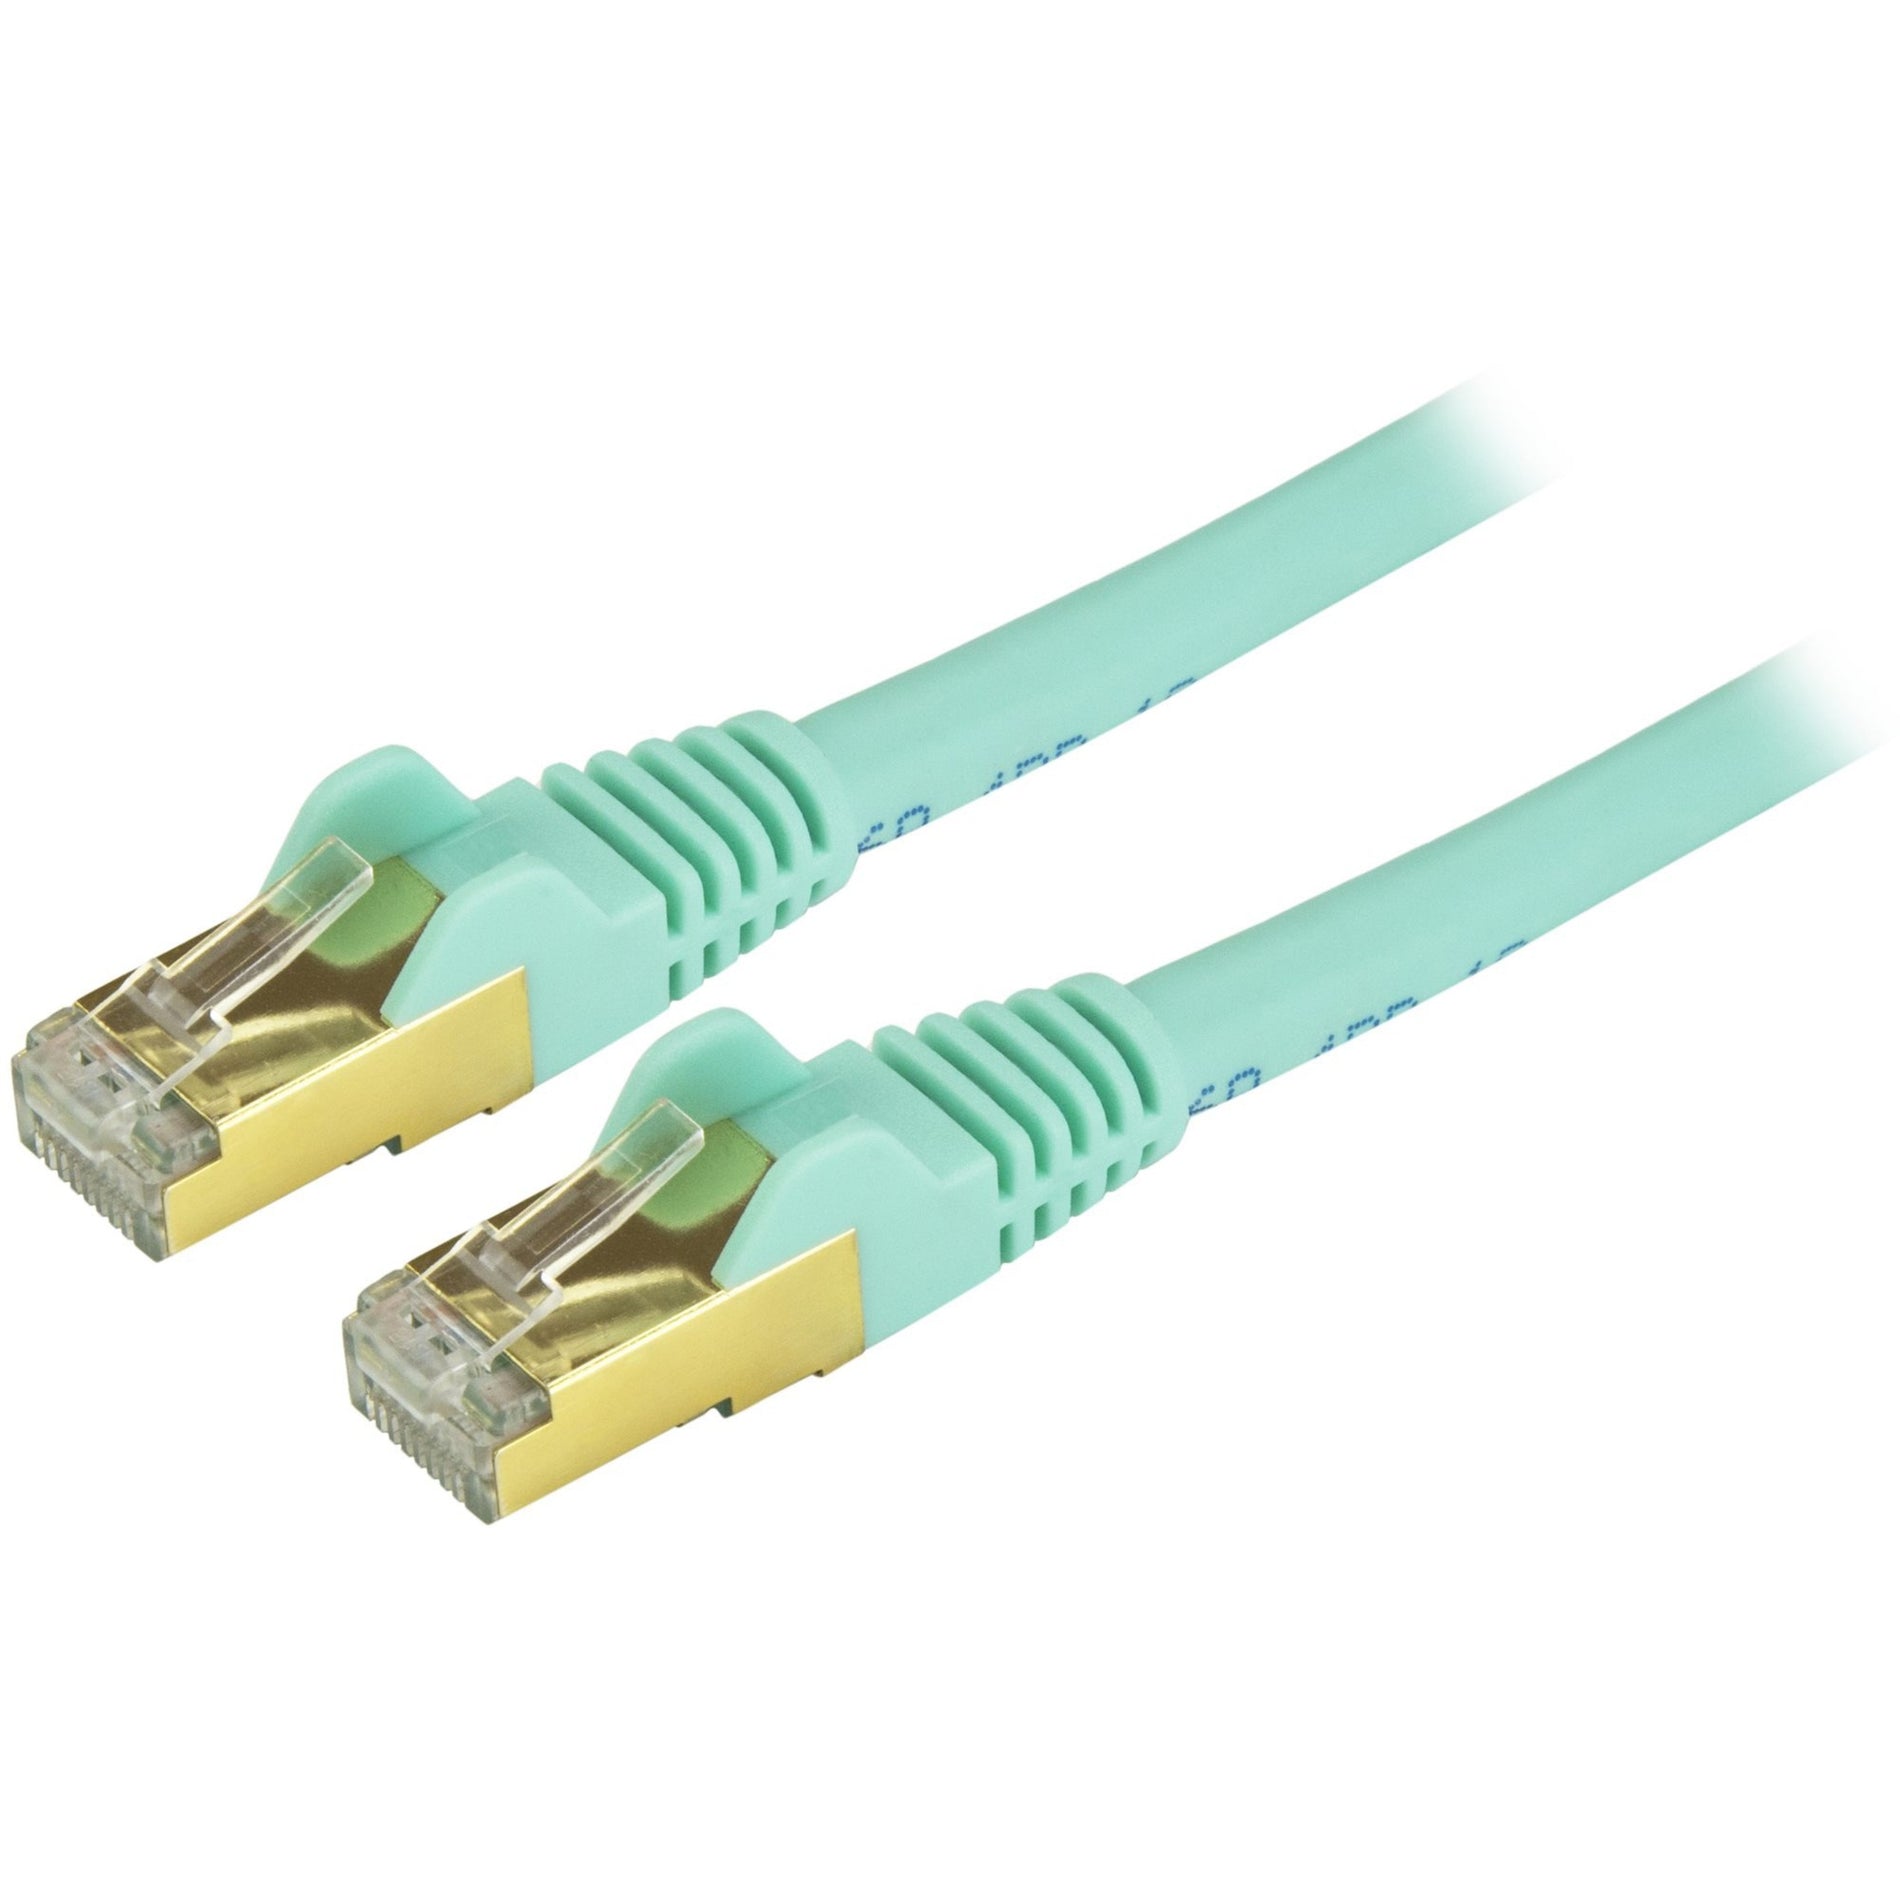 StarTech.com C6ASPAT9AQ Cat6a Ethernet Patch Cable - Shielded (STP) - 9 ft. Aqua Snagless RJ45 Ethernet Cord